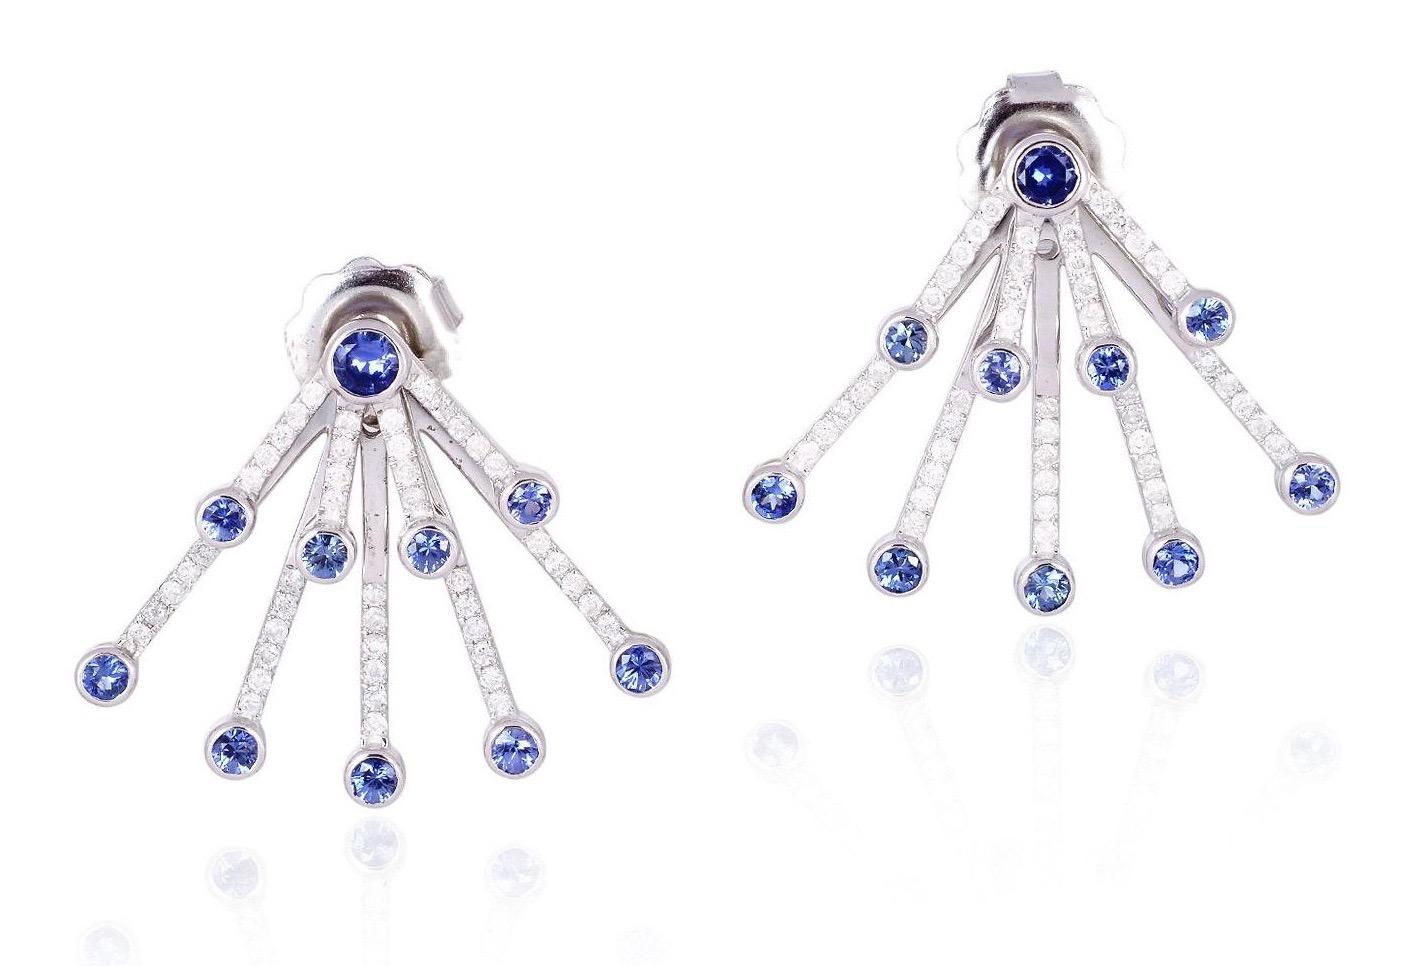 1.75 carat diamond earrings